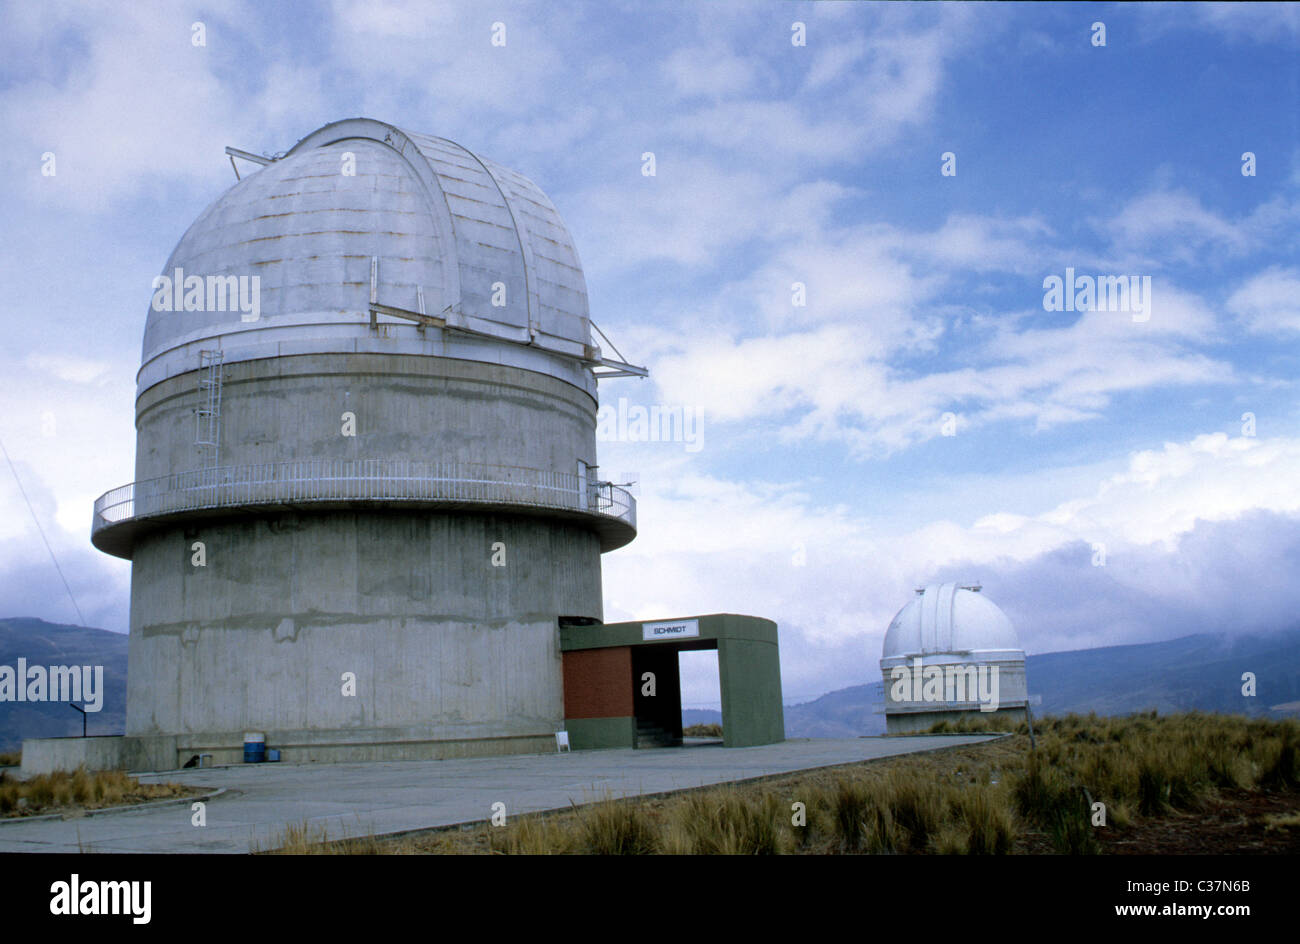 L'ACDI Centro de Investigaciones de astronomia, observatoire, Venezuela Banque D'Images